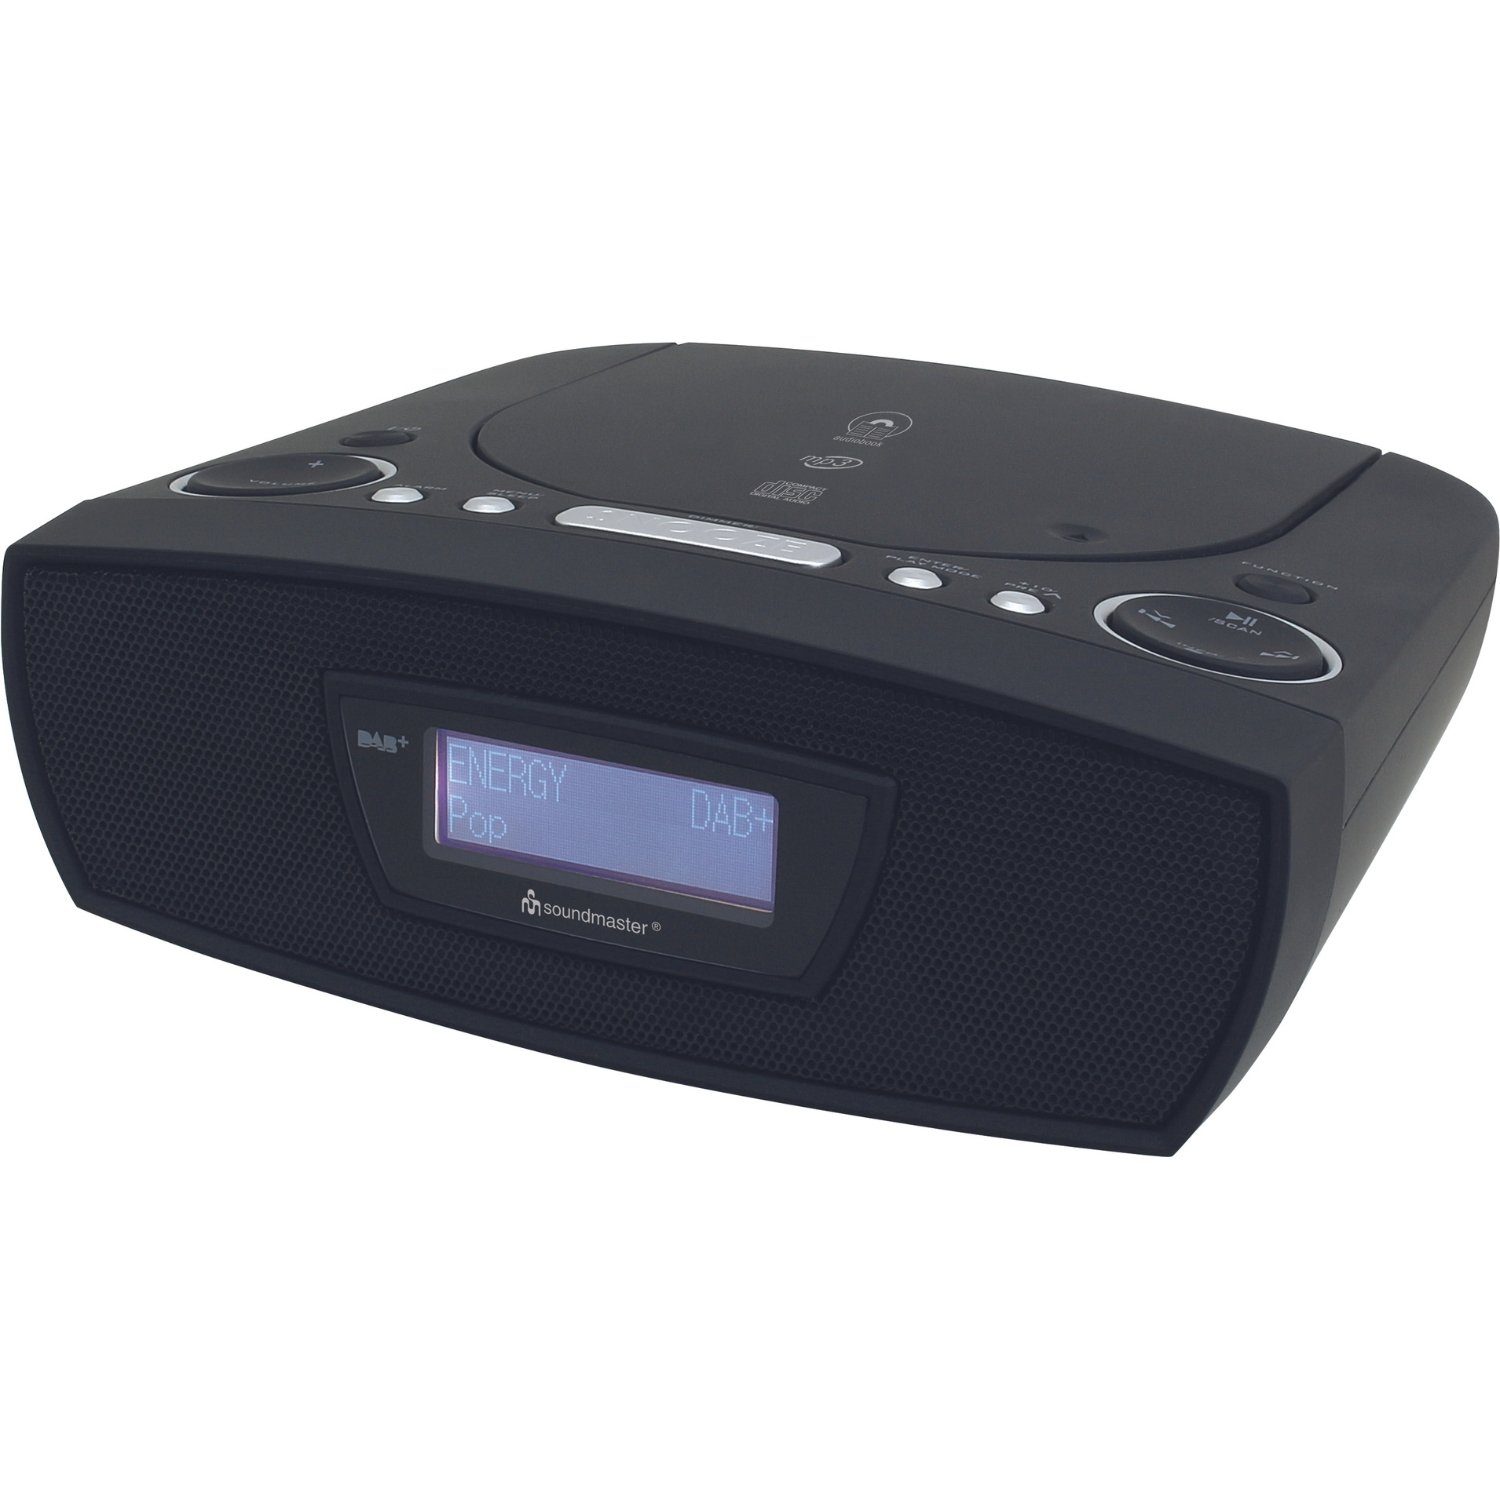 Funktion UKW Resume Nostalgie mit Uhrenradio mit und Streoanlage CD MP3 URD480SW Festsenderspeicher Uhrenradio, DAB+ und UKW-RDS Soundmaster DAB+ USB